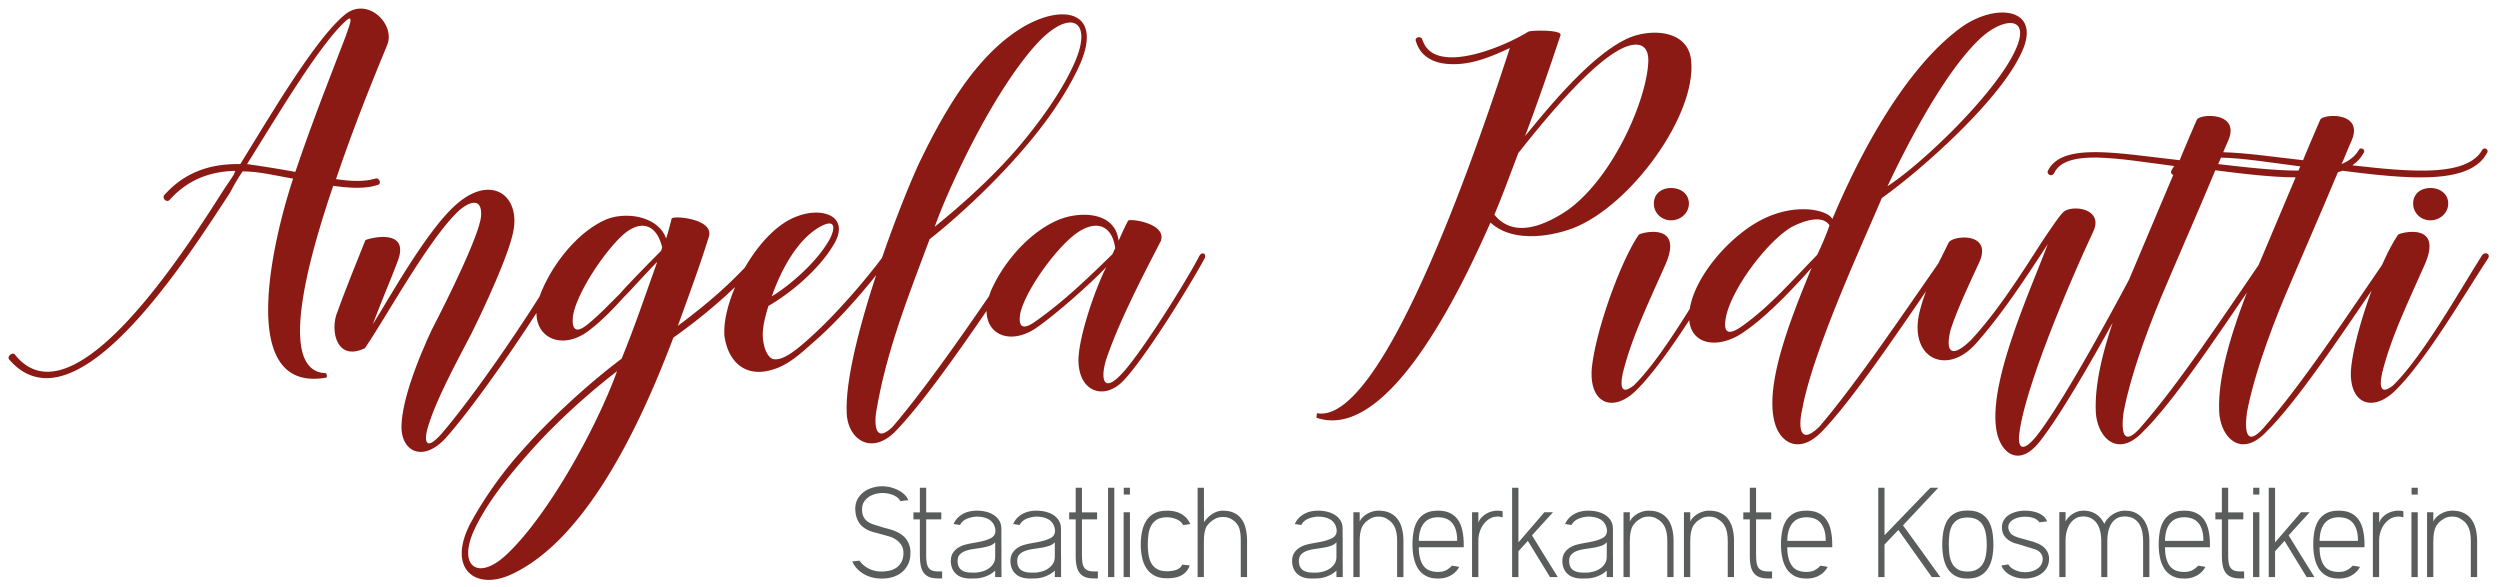 Angela Pidutti logo